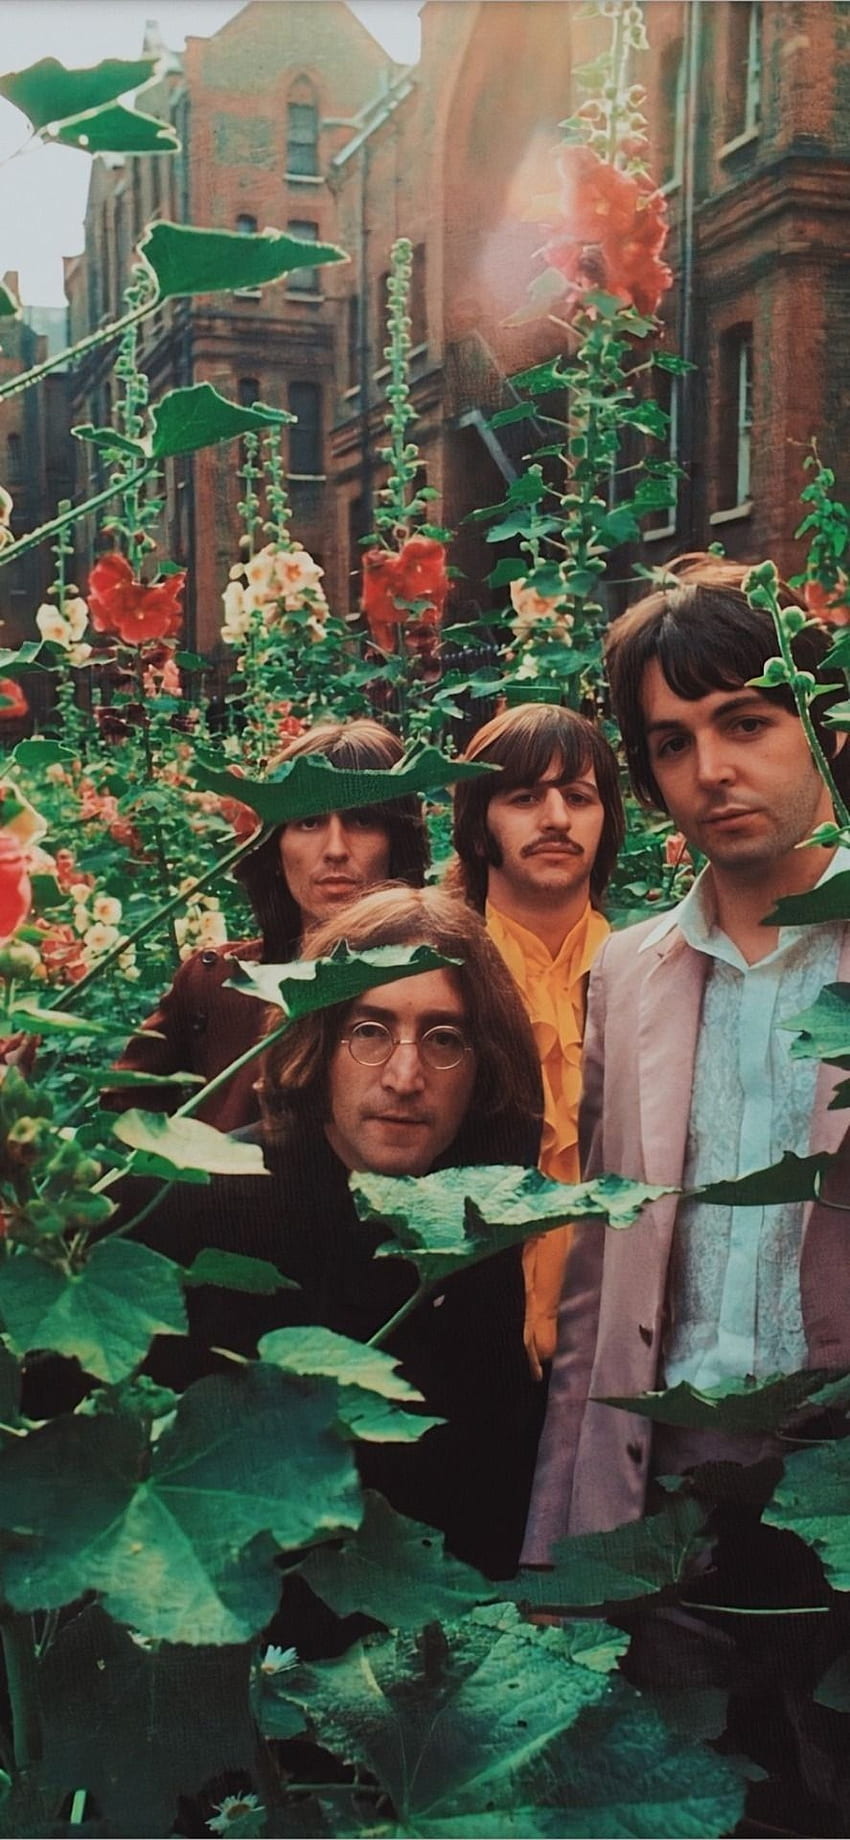 The Beatles, rock, verde, música, trippy, naturaleza, vintage, guay, retro, 60s, 70s fondo de pantalla del teléfono